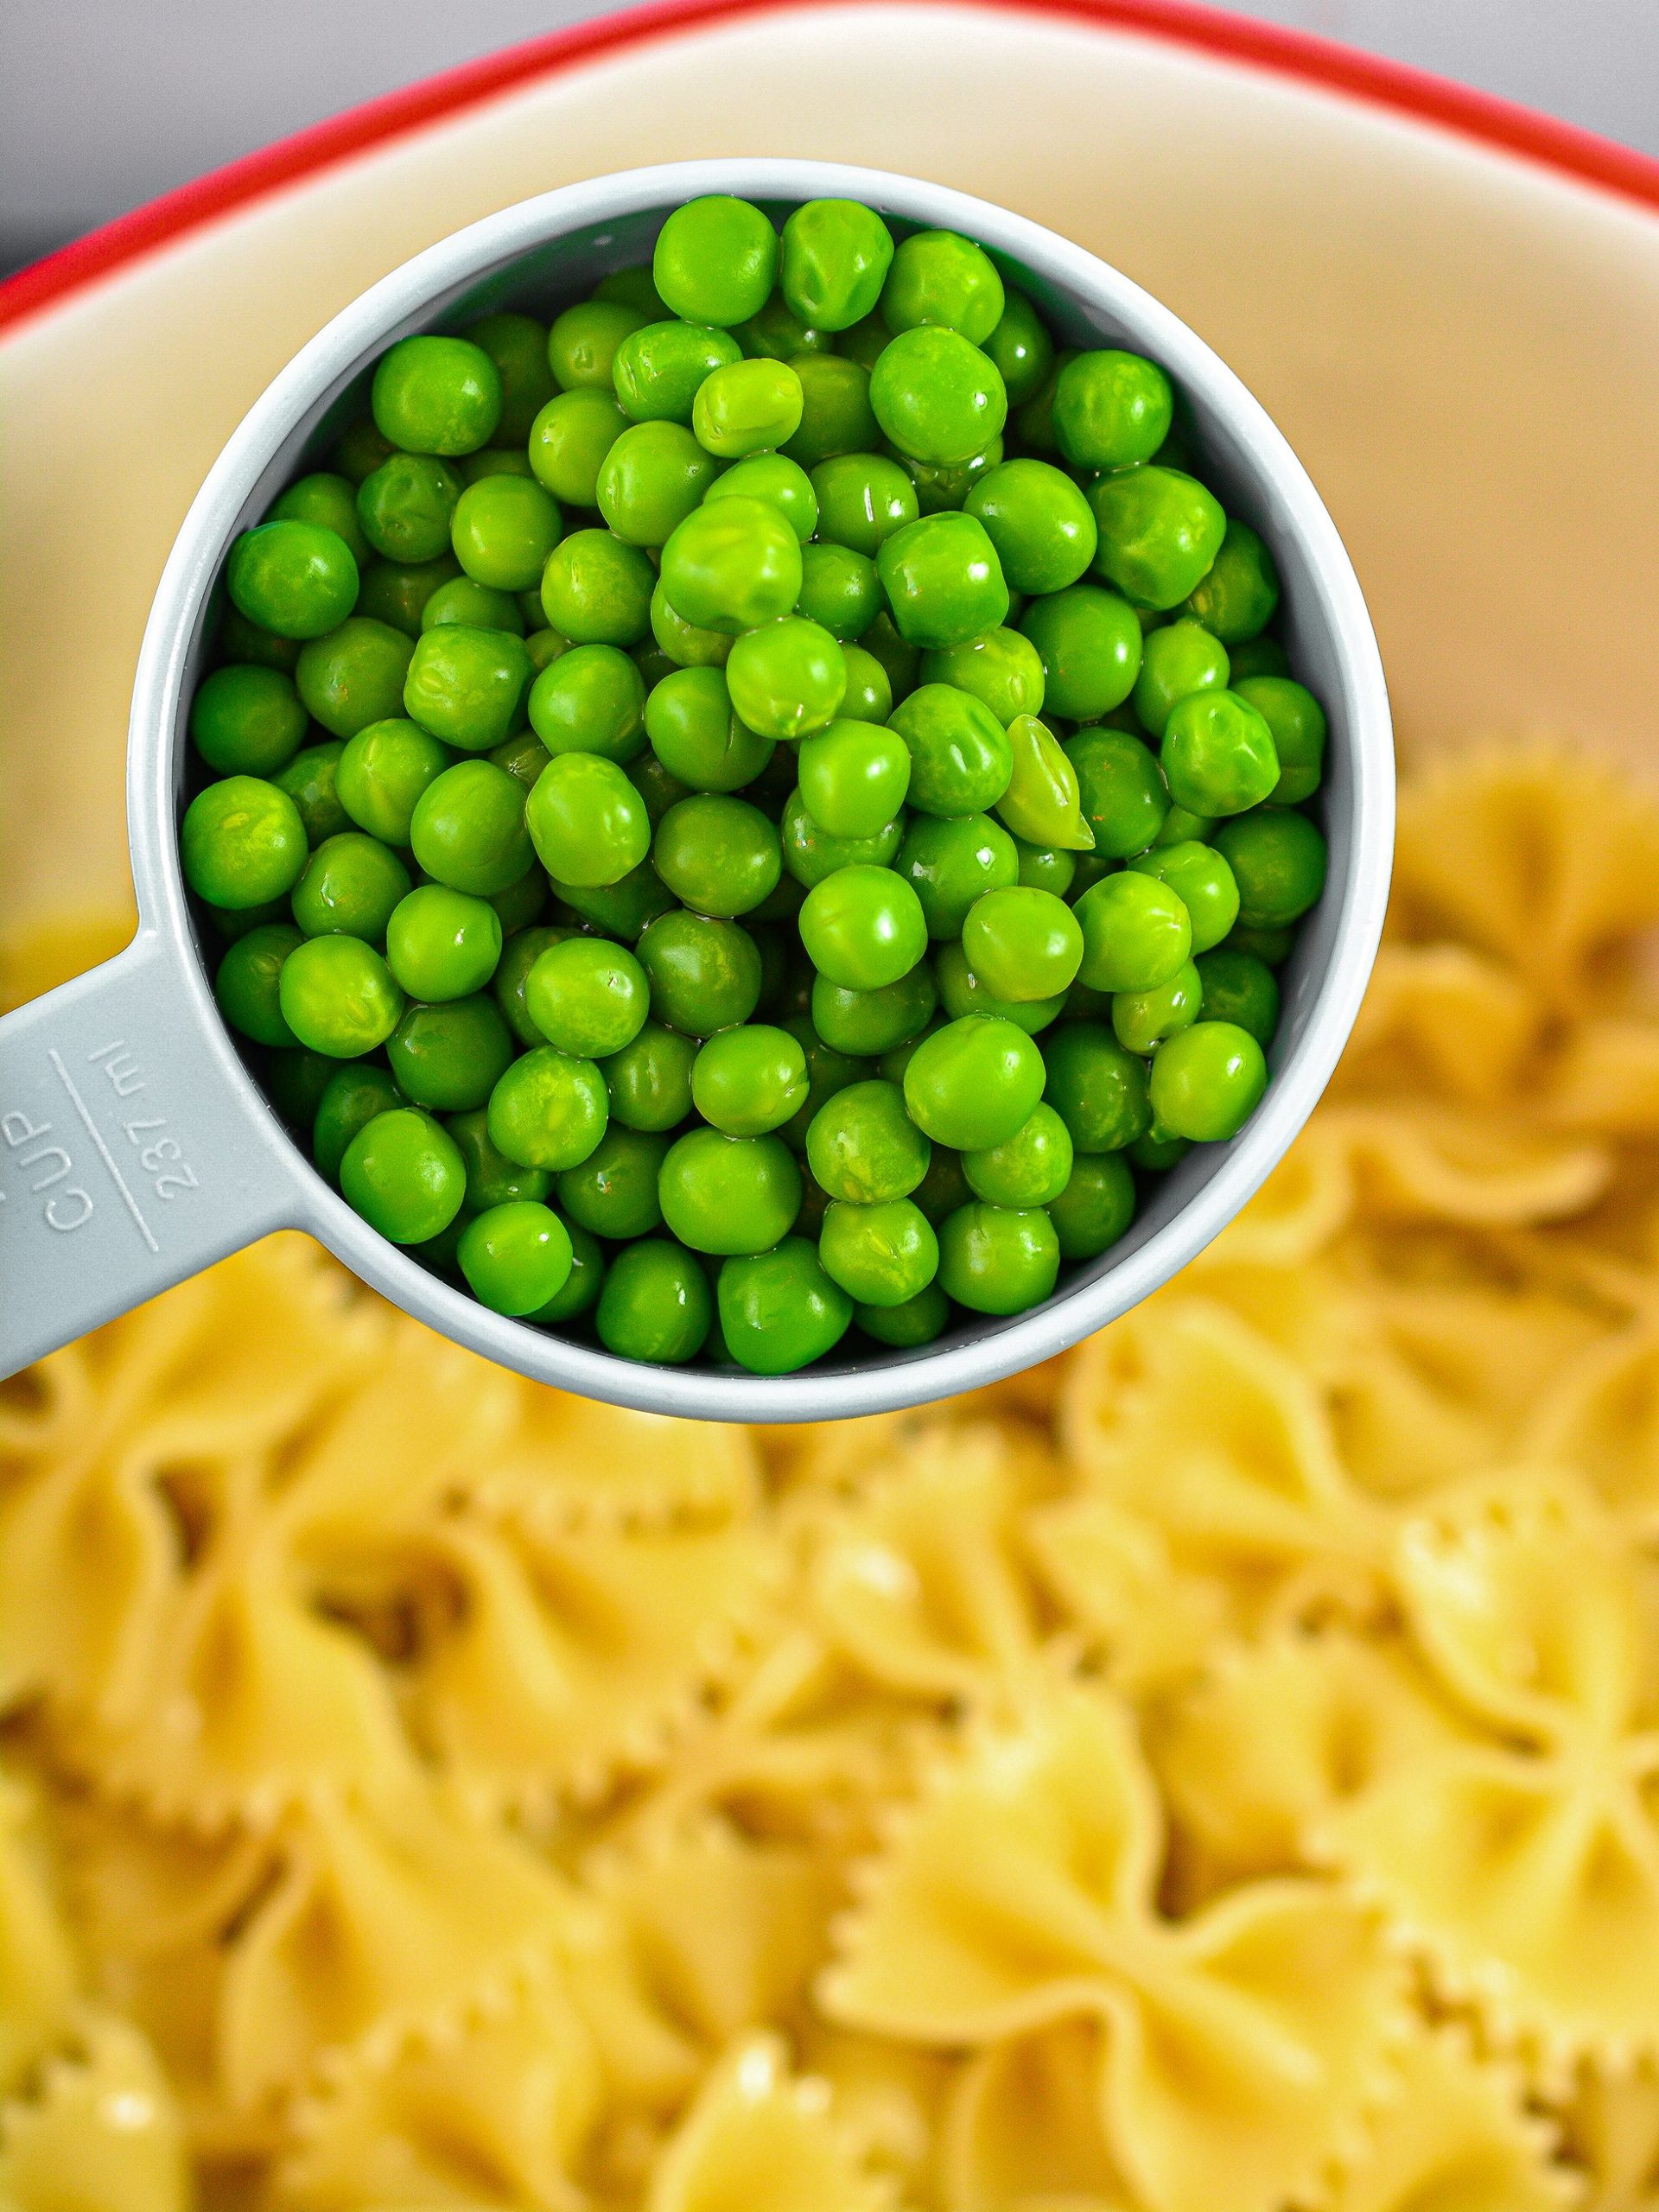 add the frozen peas.